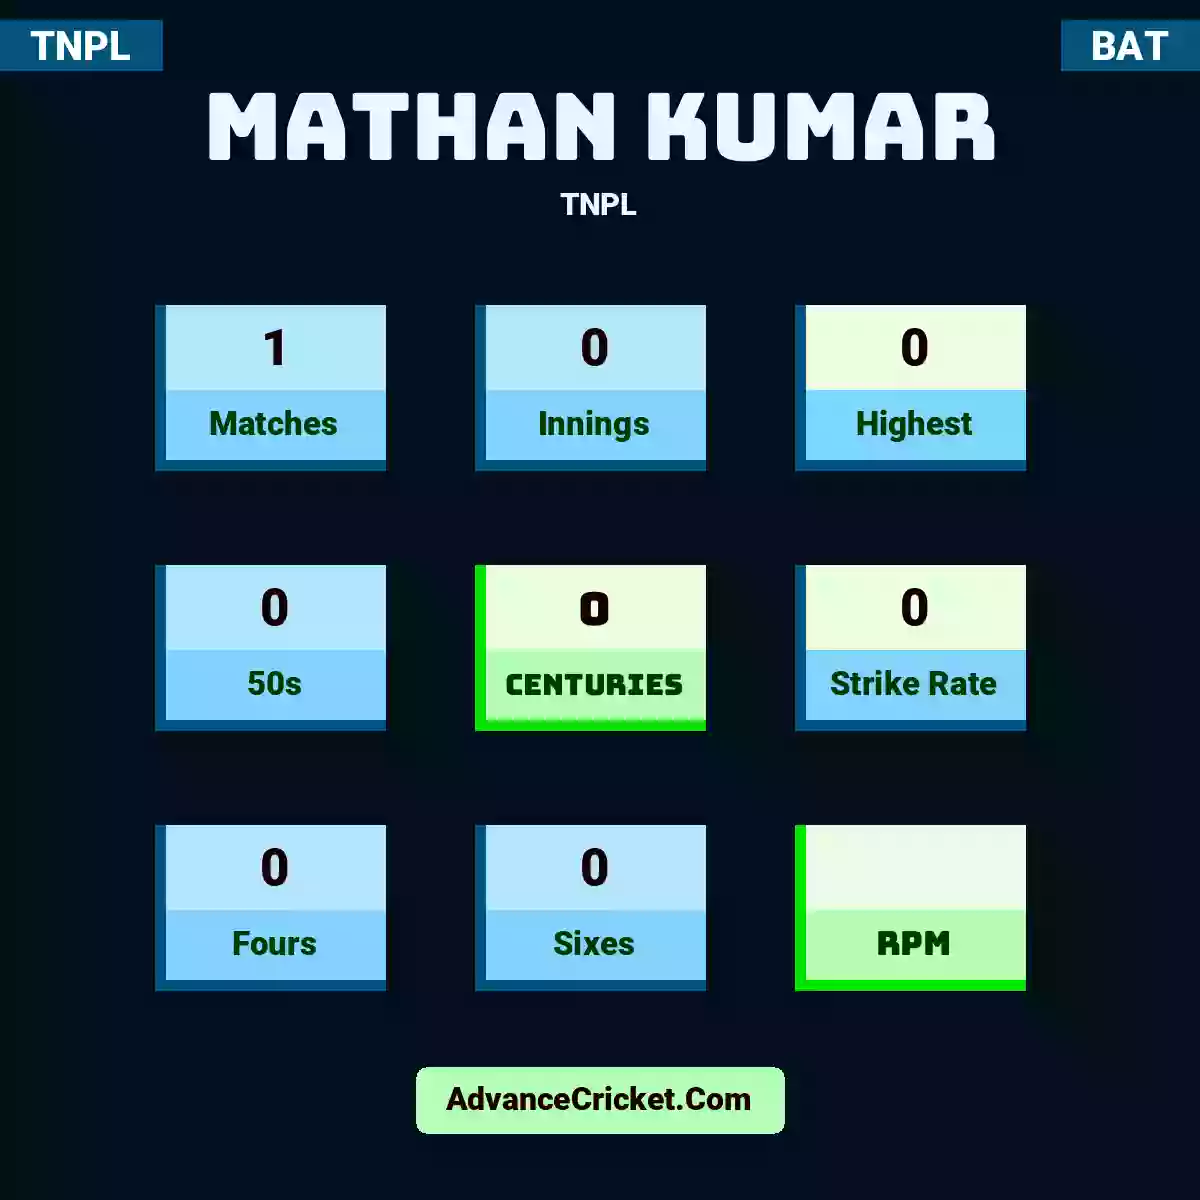 Mathan Kumar TNPL , Mathan Kumar played 1 matches, scored 0 runs as highest, 0 half-centuries, and 0 centuries, with a strike rate of 0. M.Kumar hit 0 fours and 0 sixes.